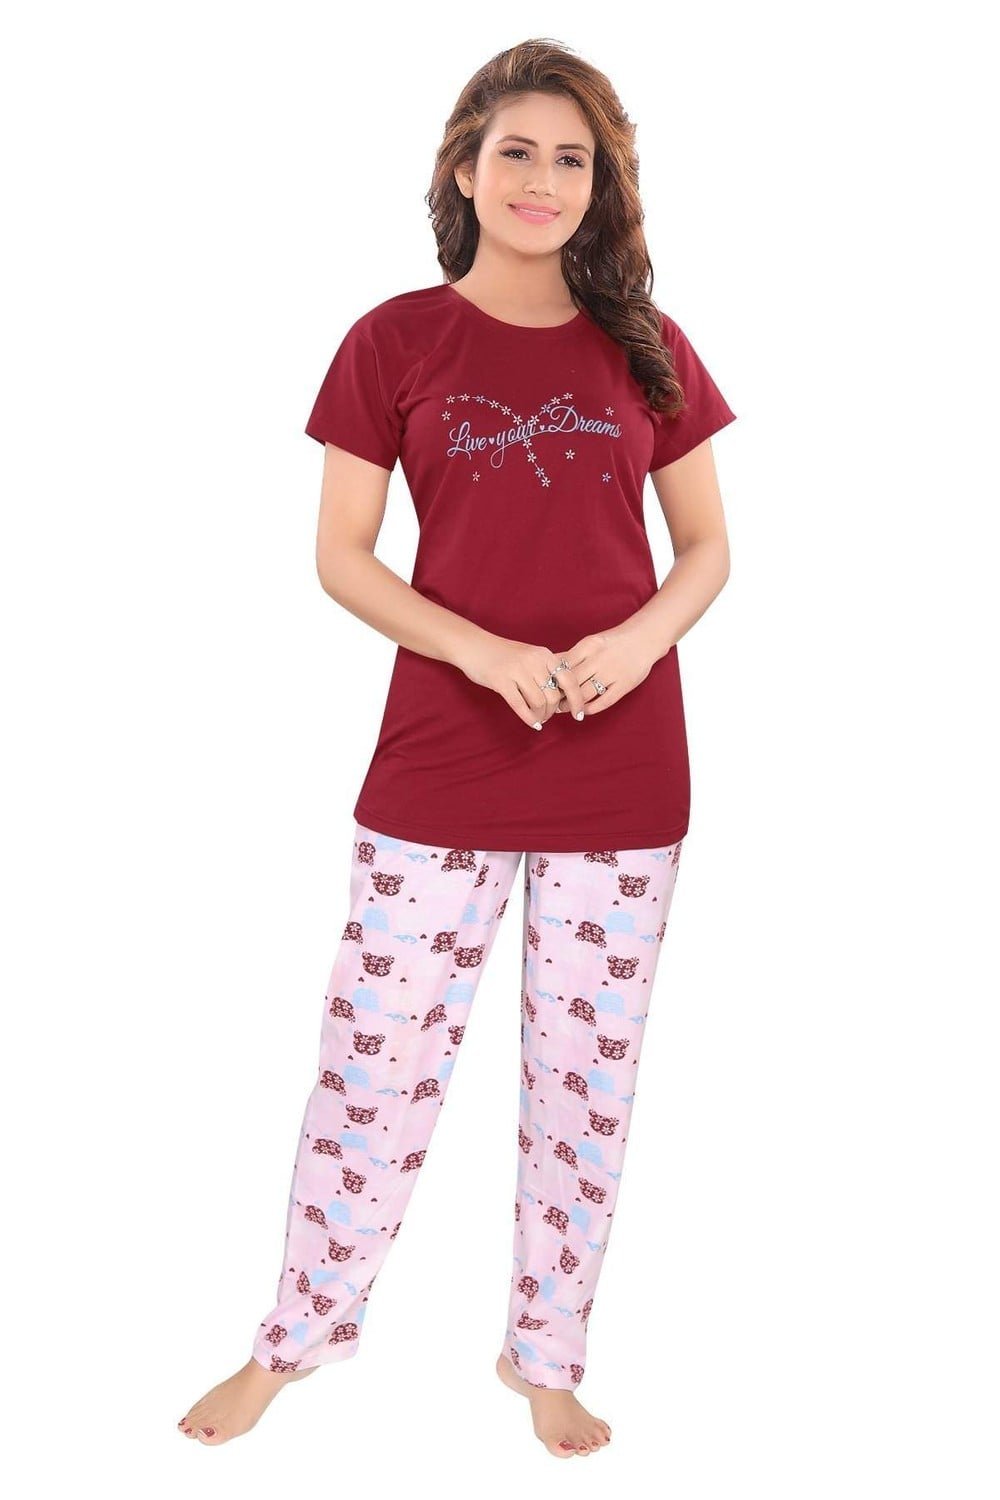 Pierre Donna Women's Cotton Pajama set With Pants - Women Sleepwear